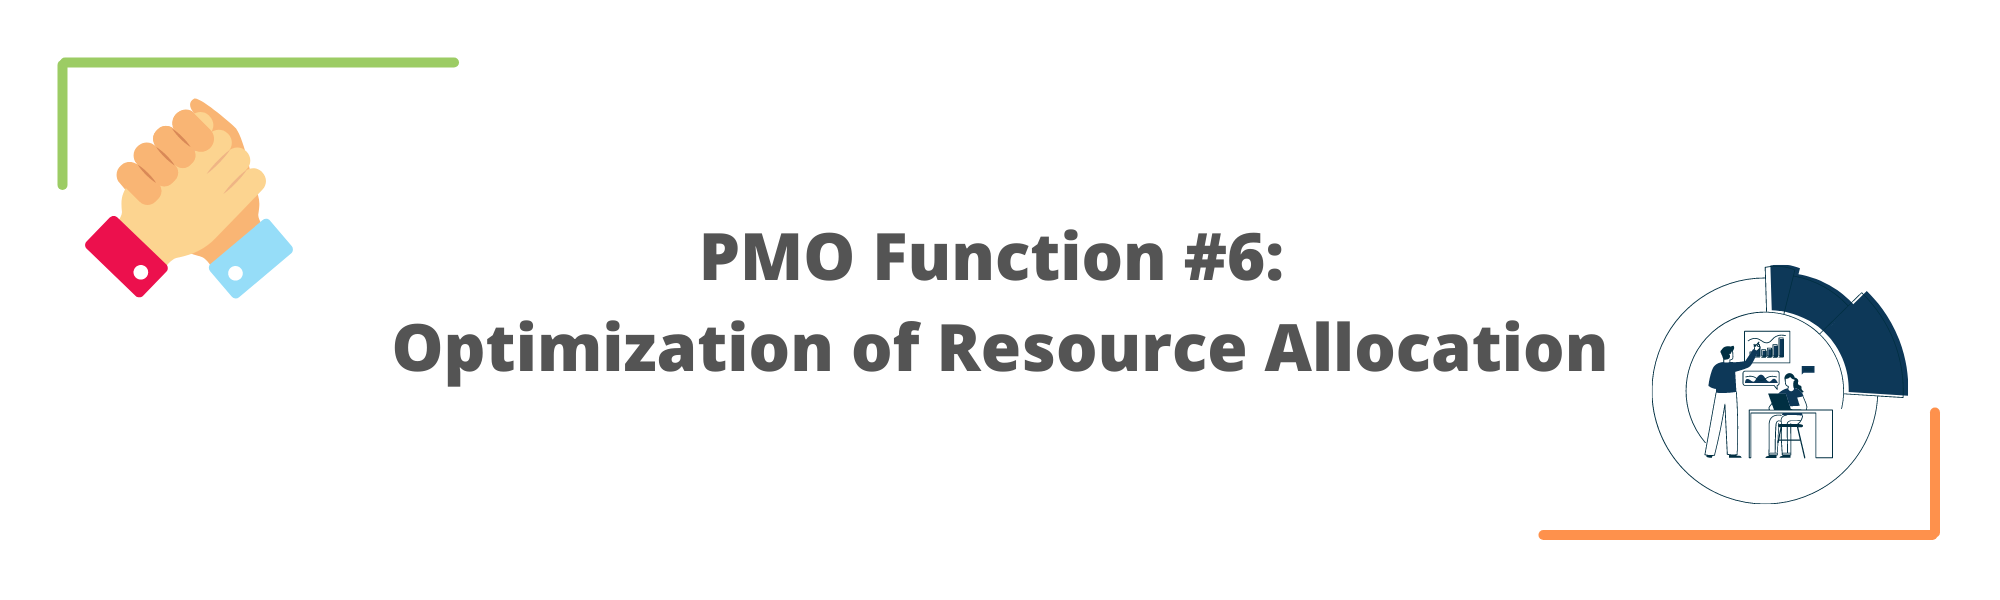 PMO Function #6 - Optimization of Resource Allocation